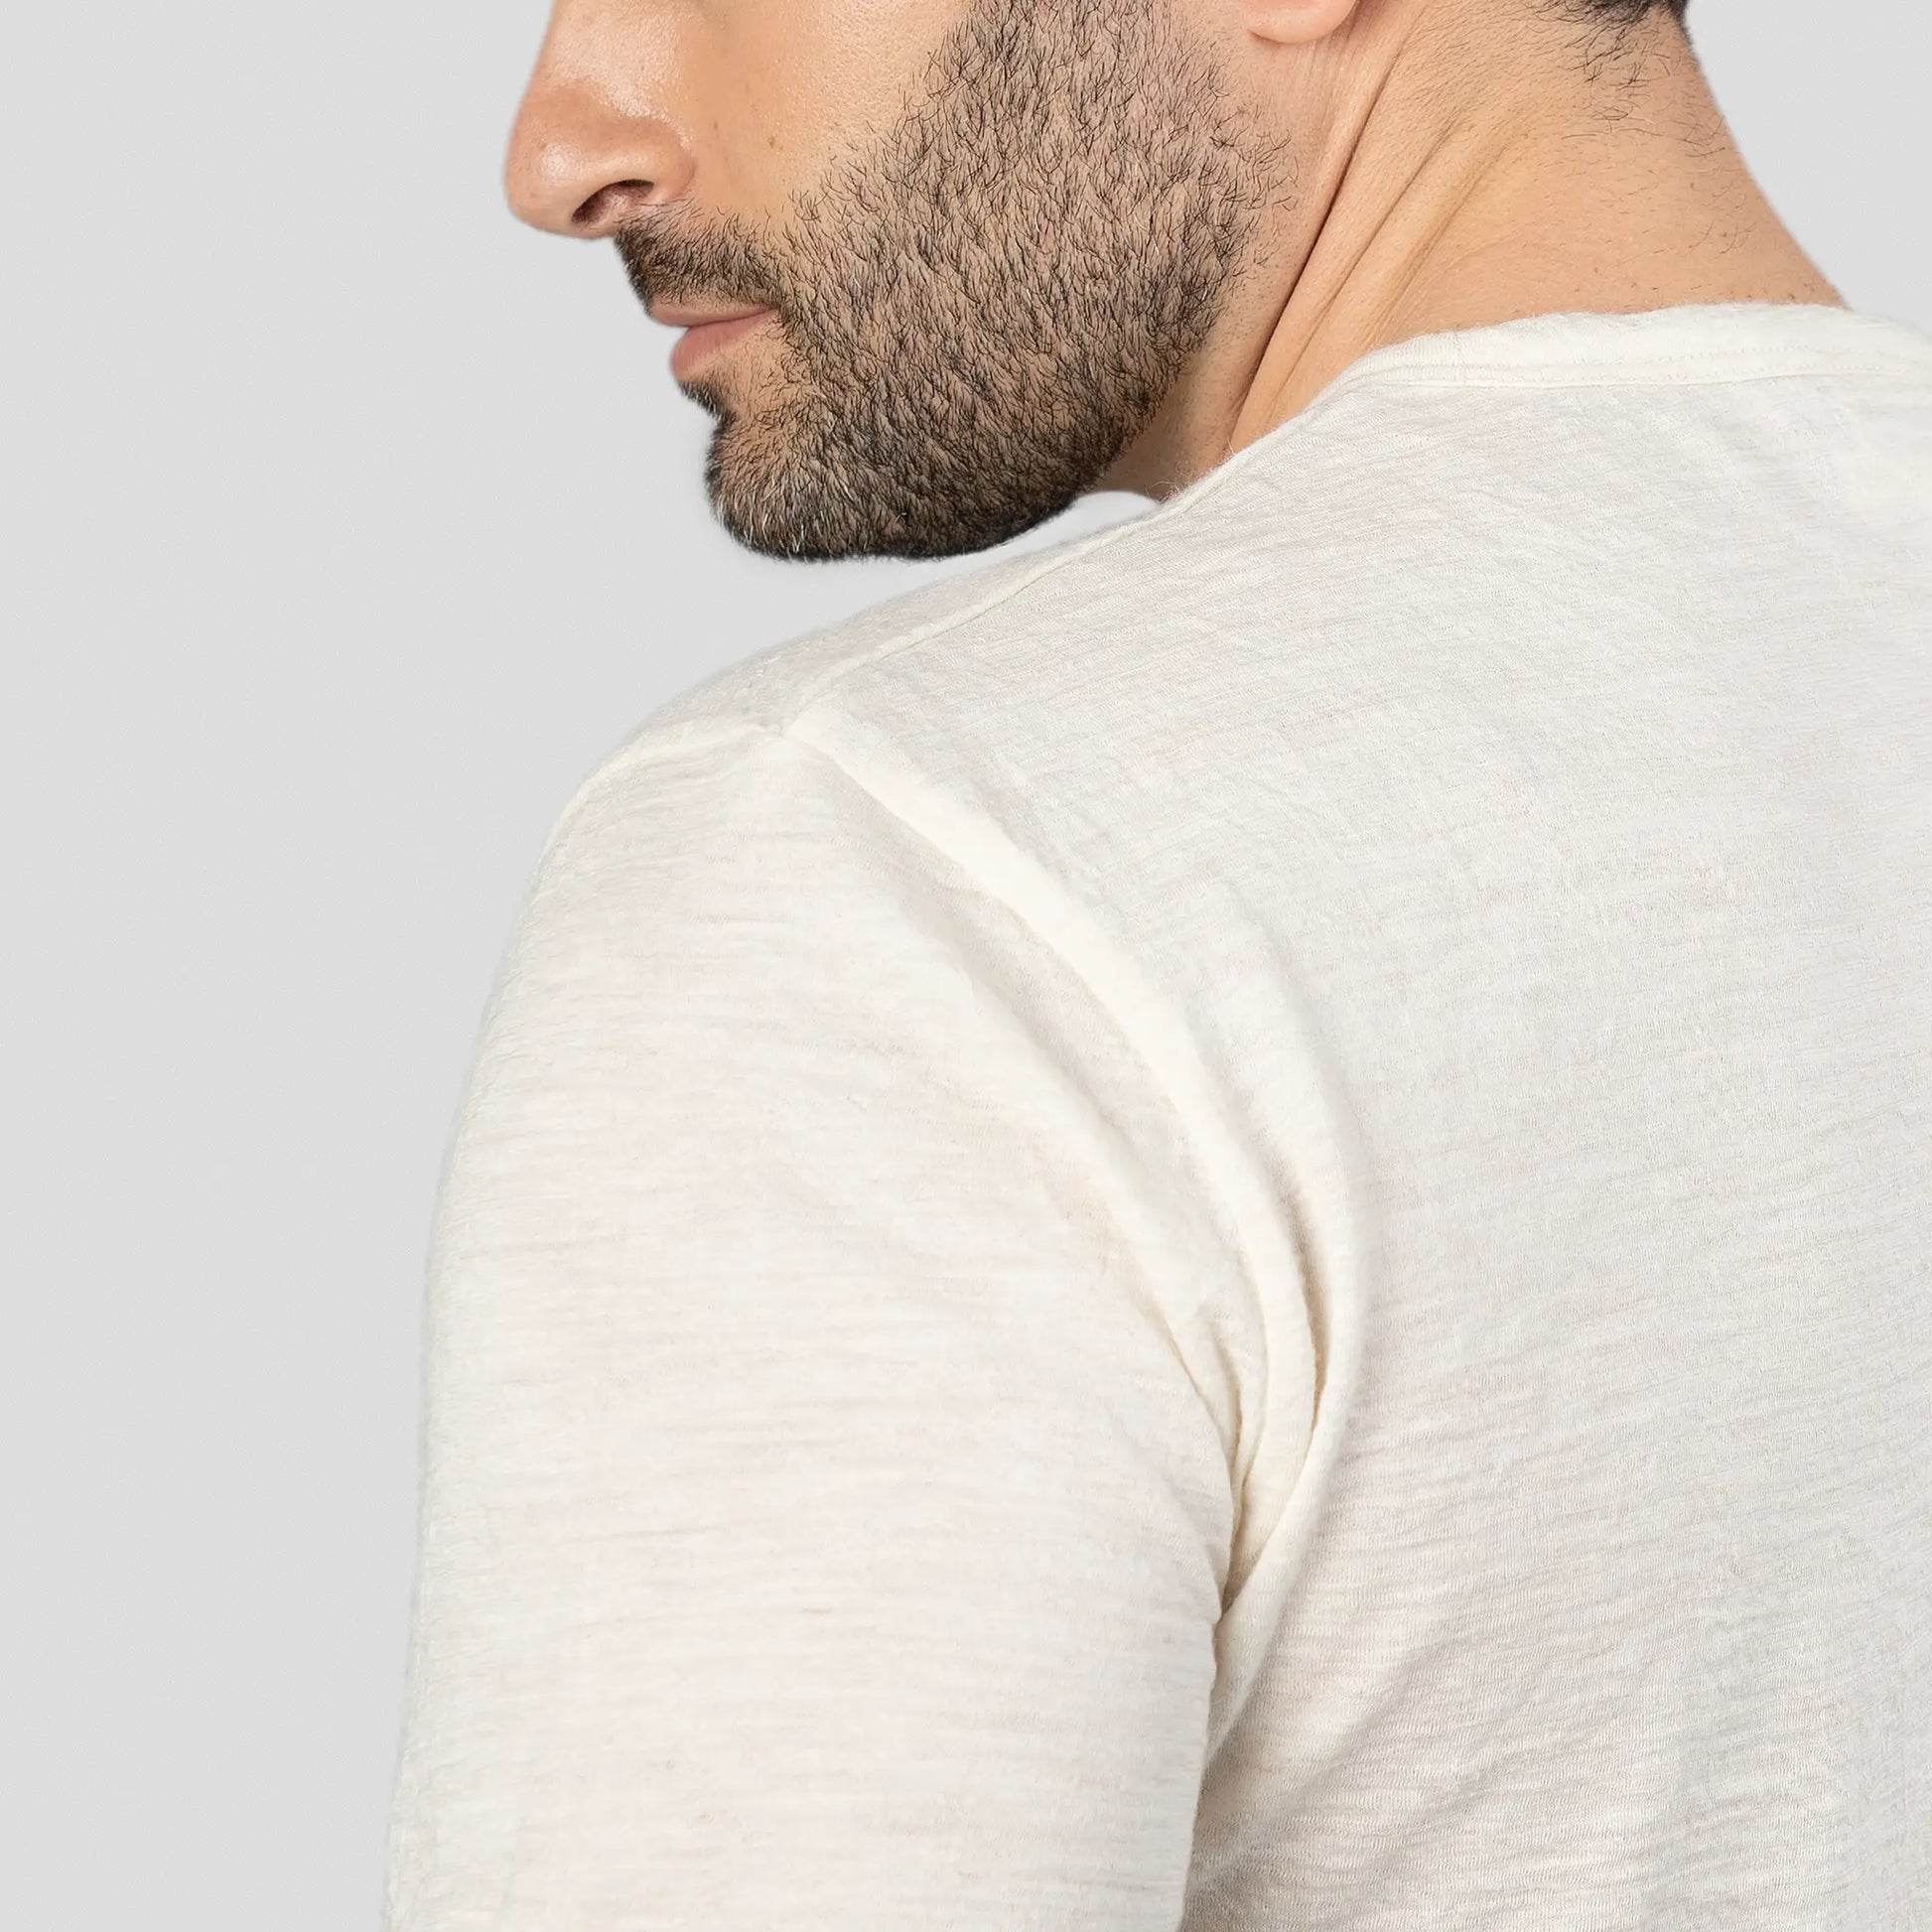 mens ultra soft crew neck tshirt color natural white